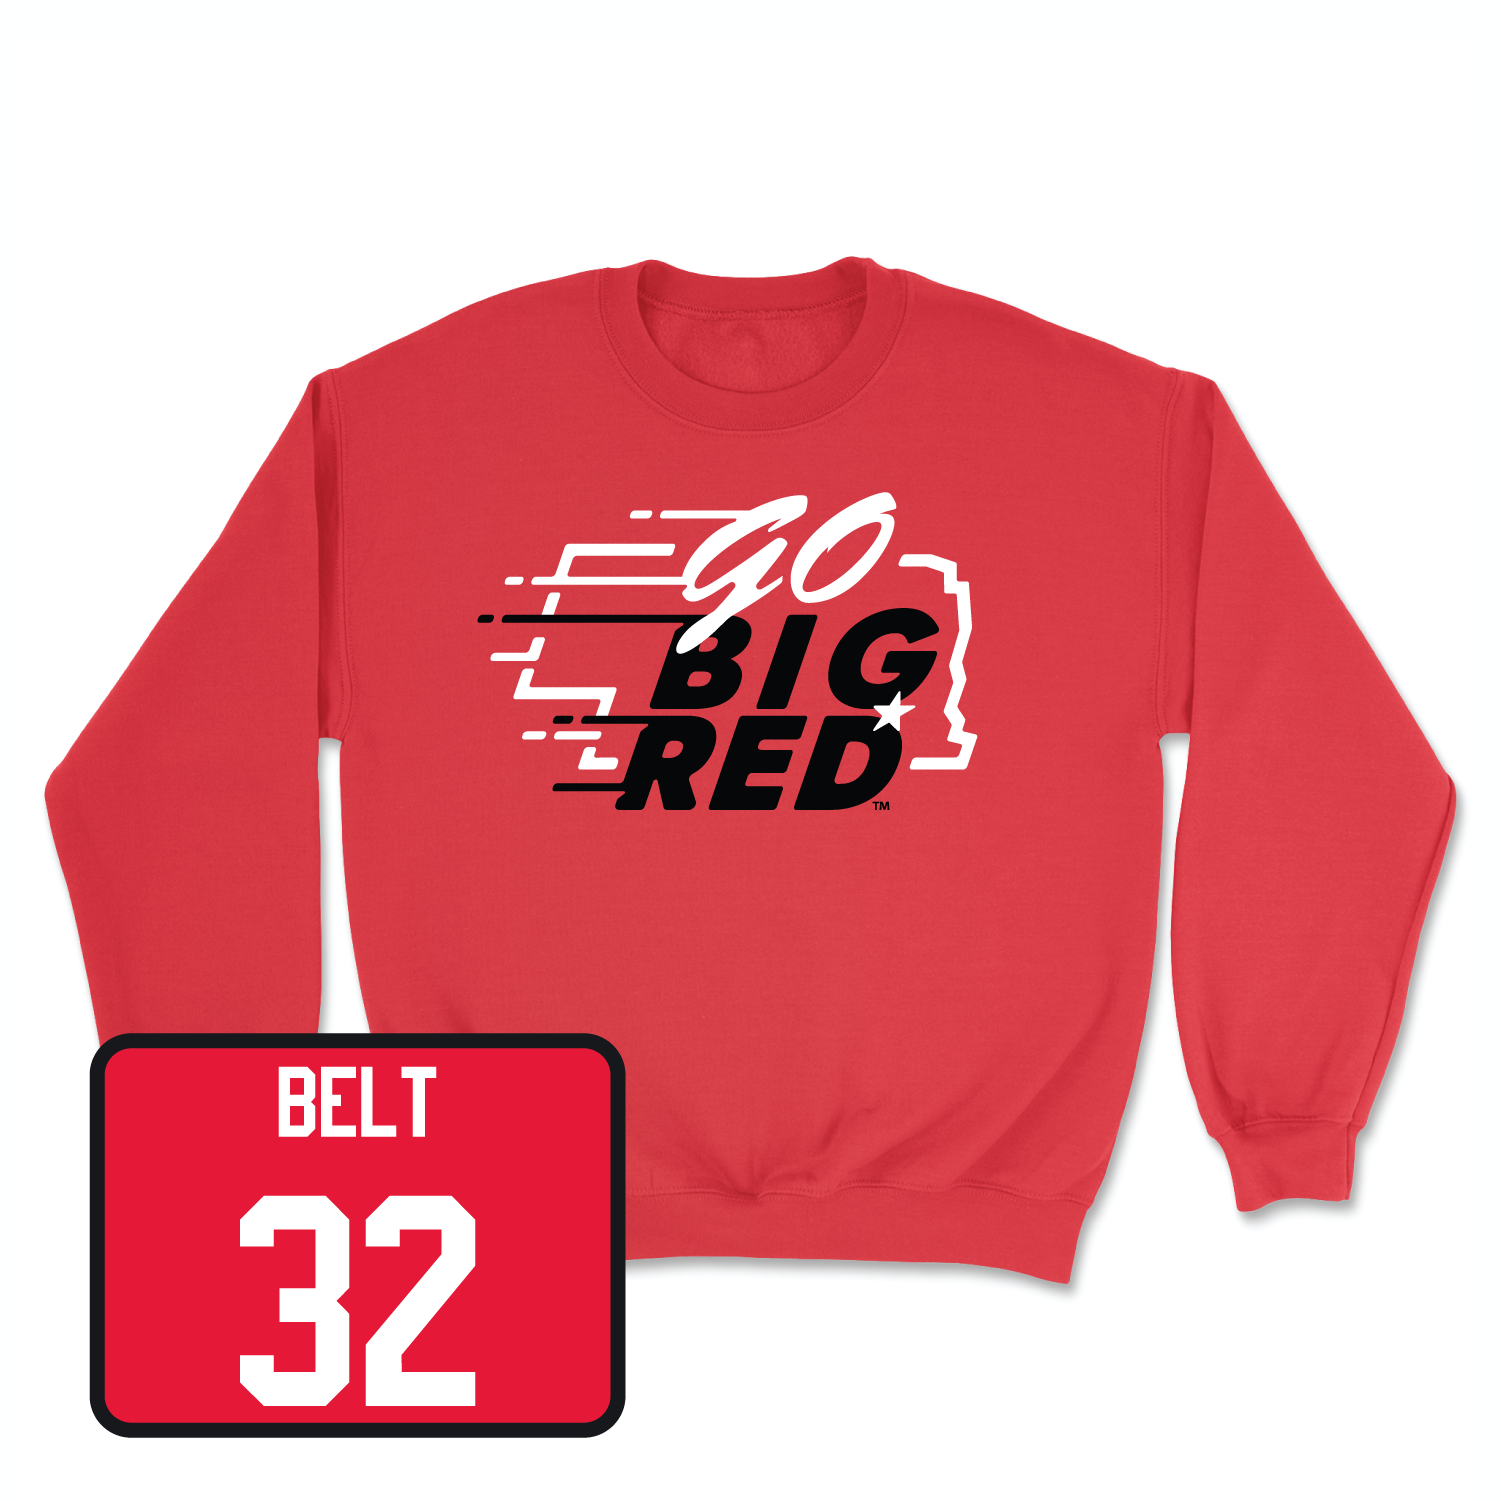 Red Football GBR Crew 4 Youth Medium / Brody Belt | #32